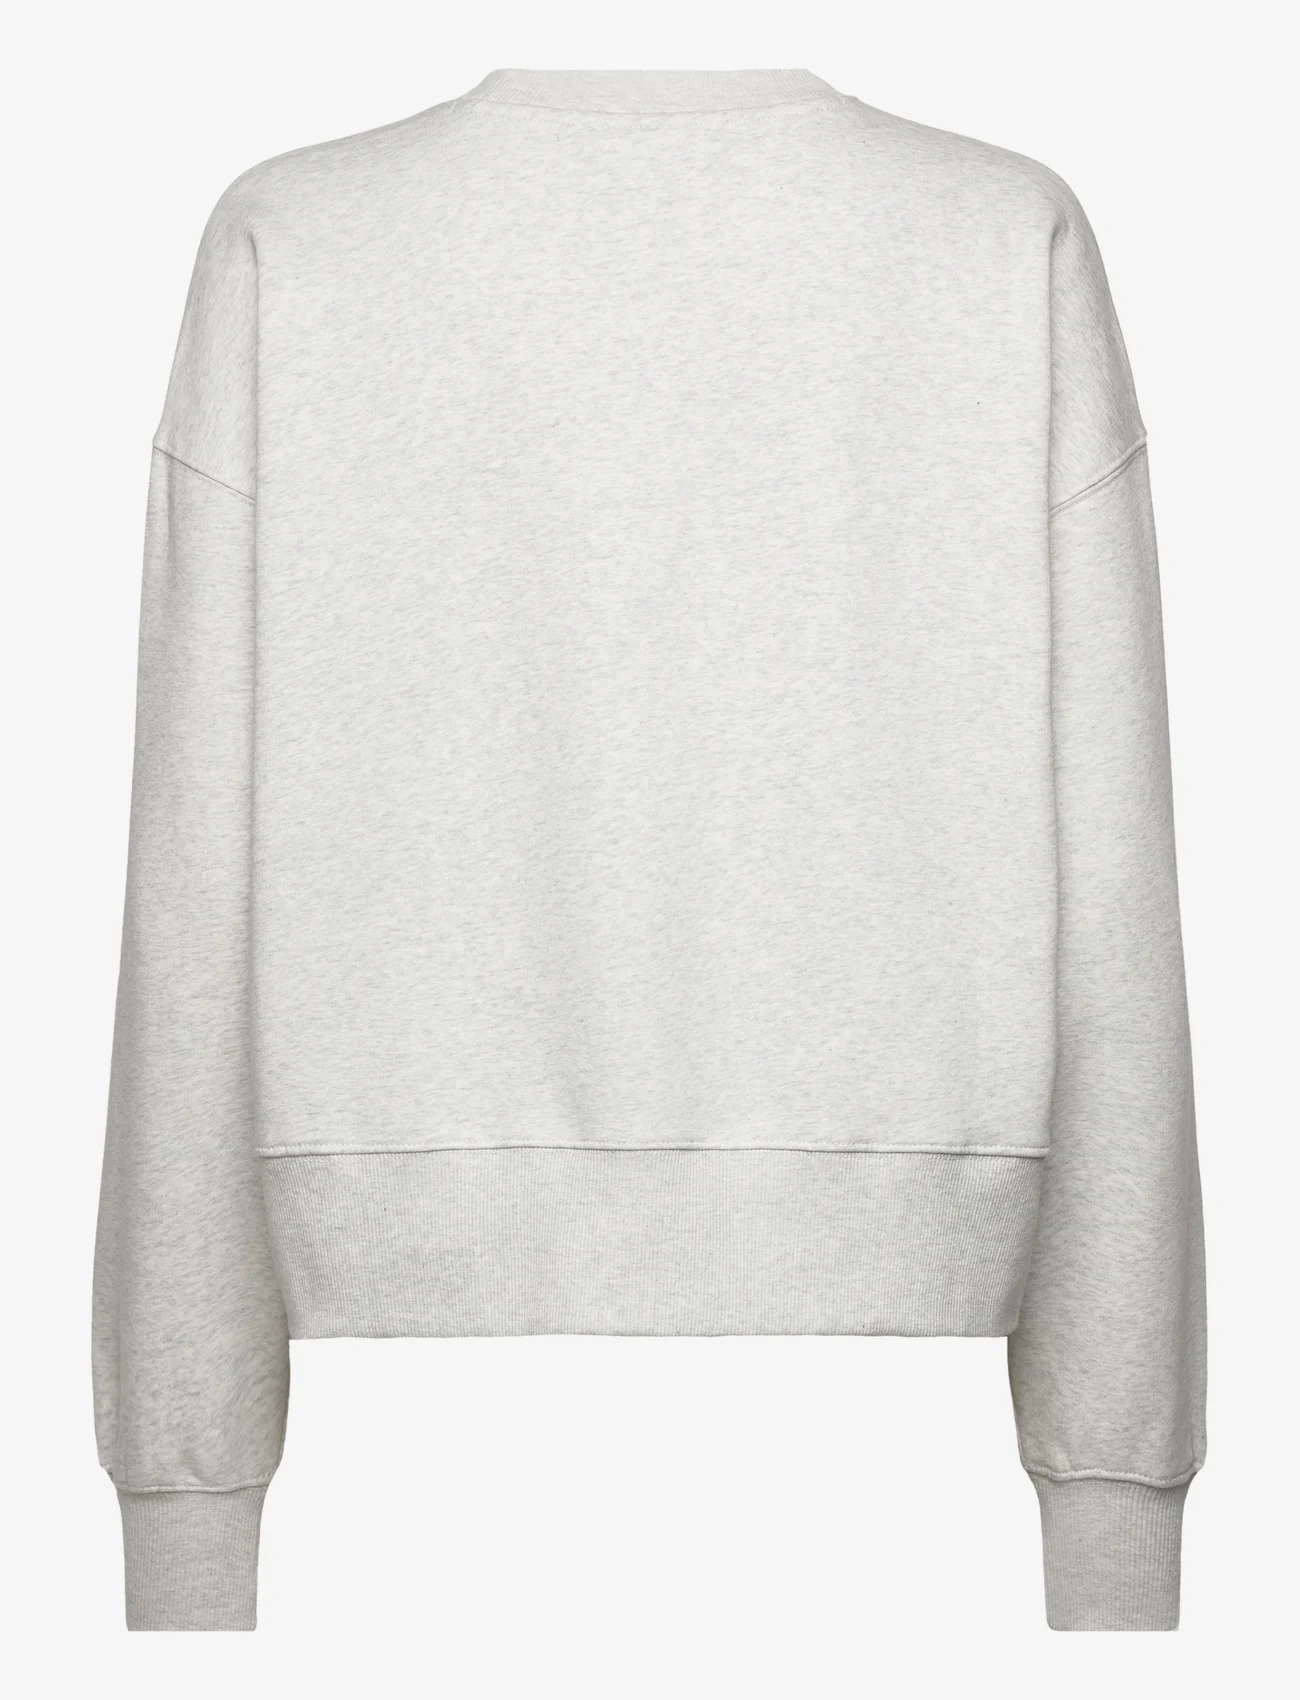 Dickies - SUMMERDALE SWEATSHIRT - sweatshirts - light gray - 1